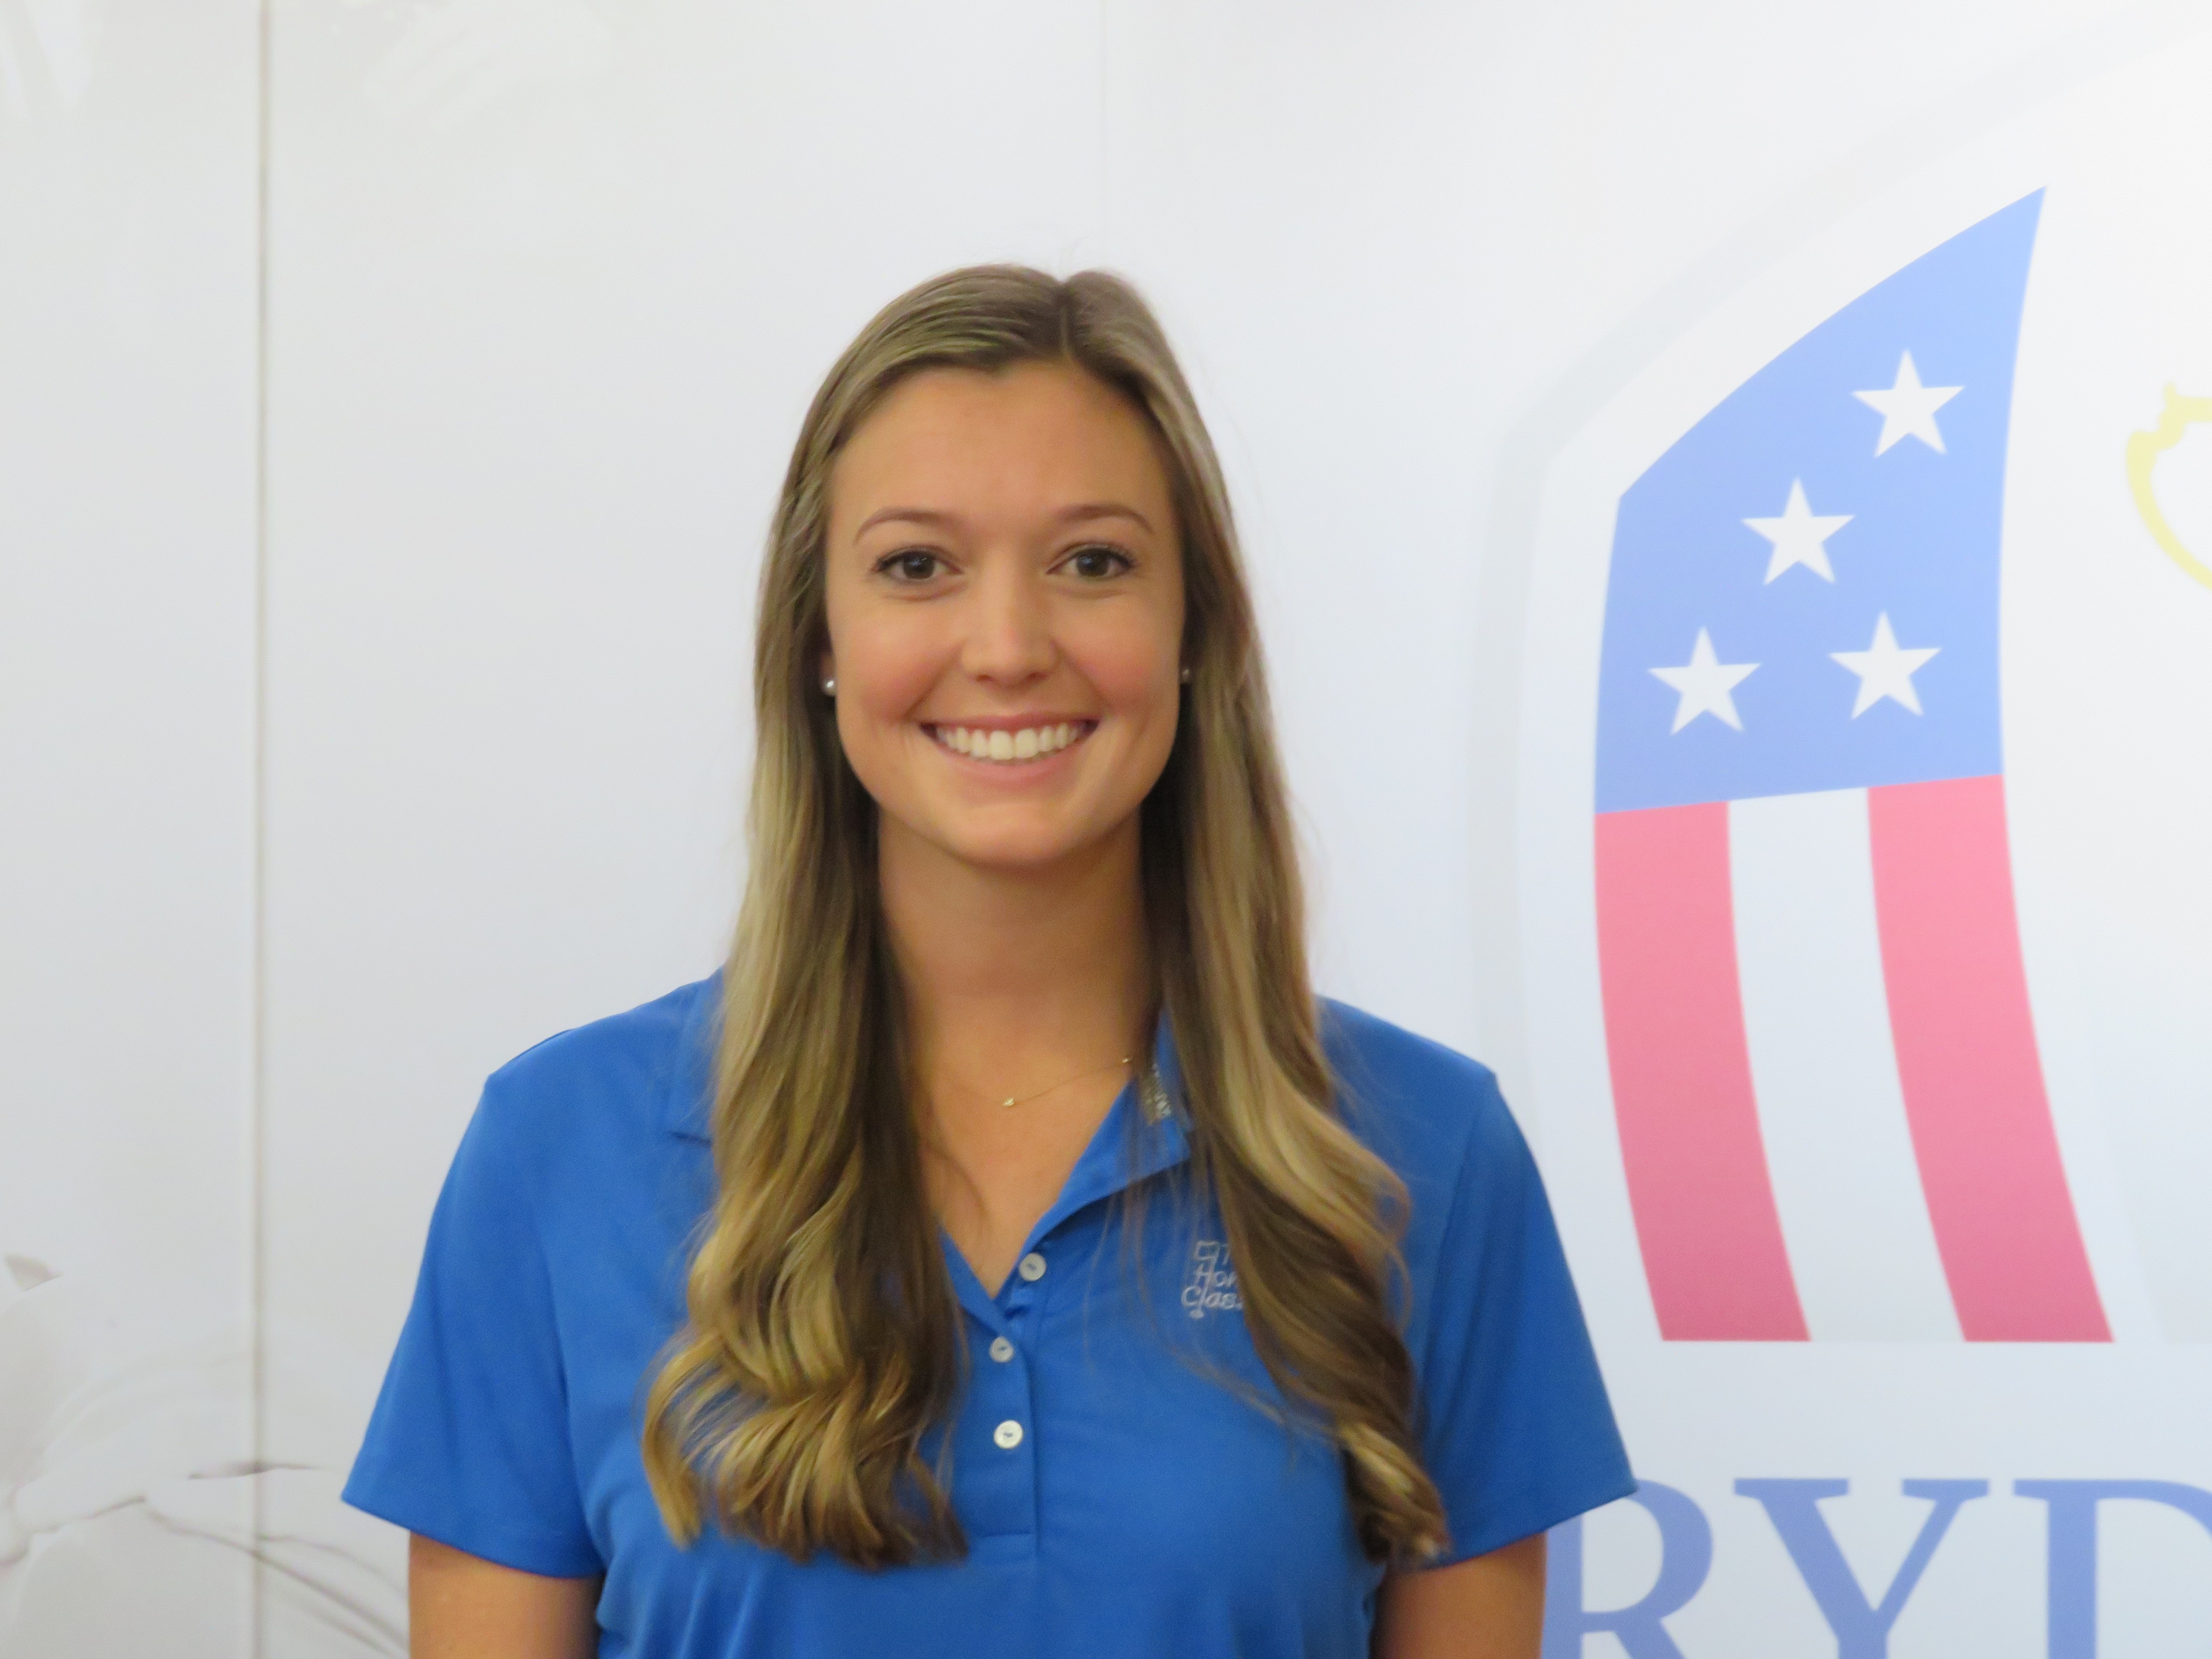 Meet Madison Temple PGA WORKS Fellow – South Florida PGA Section